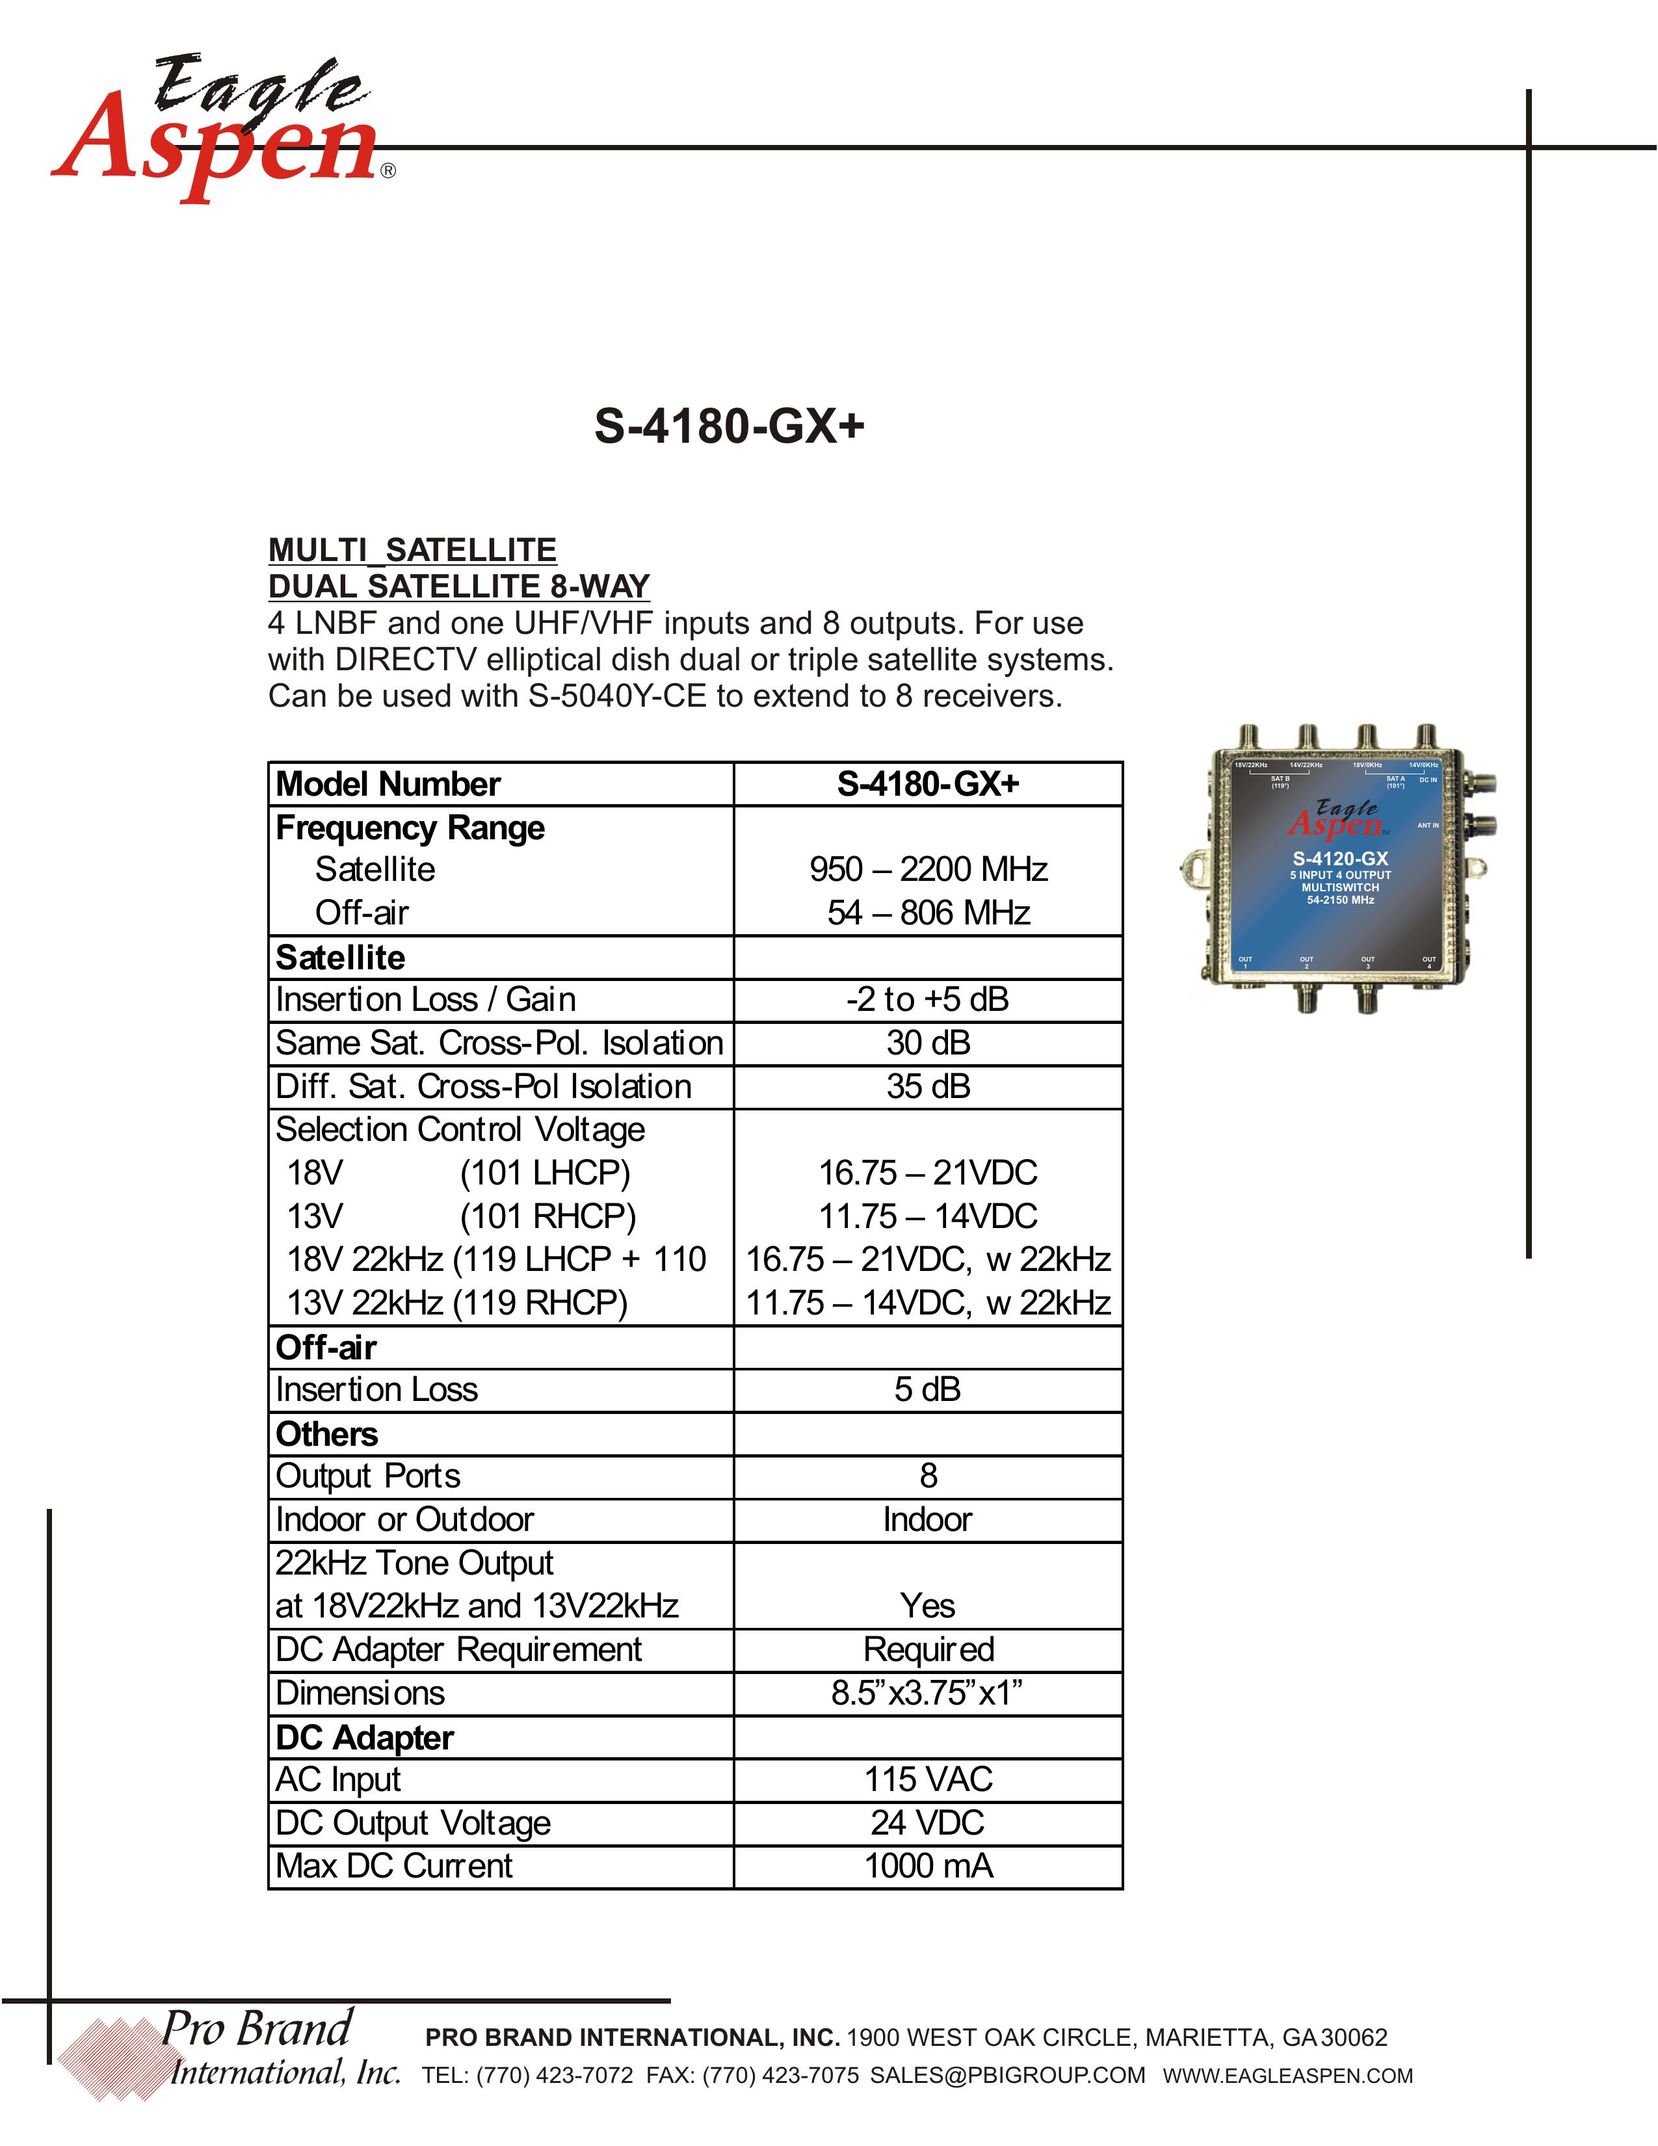 HomeTech S-4180-GX+ Satellite TV System User Manual